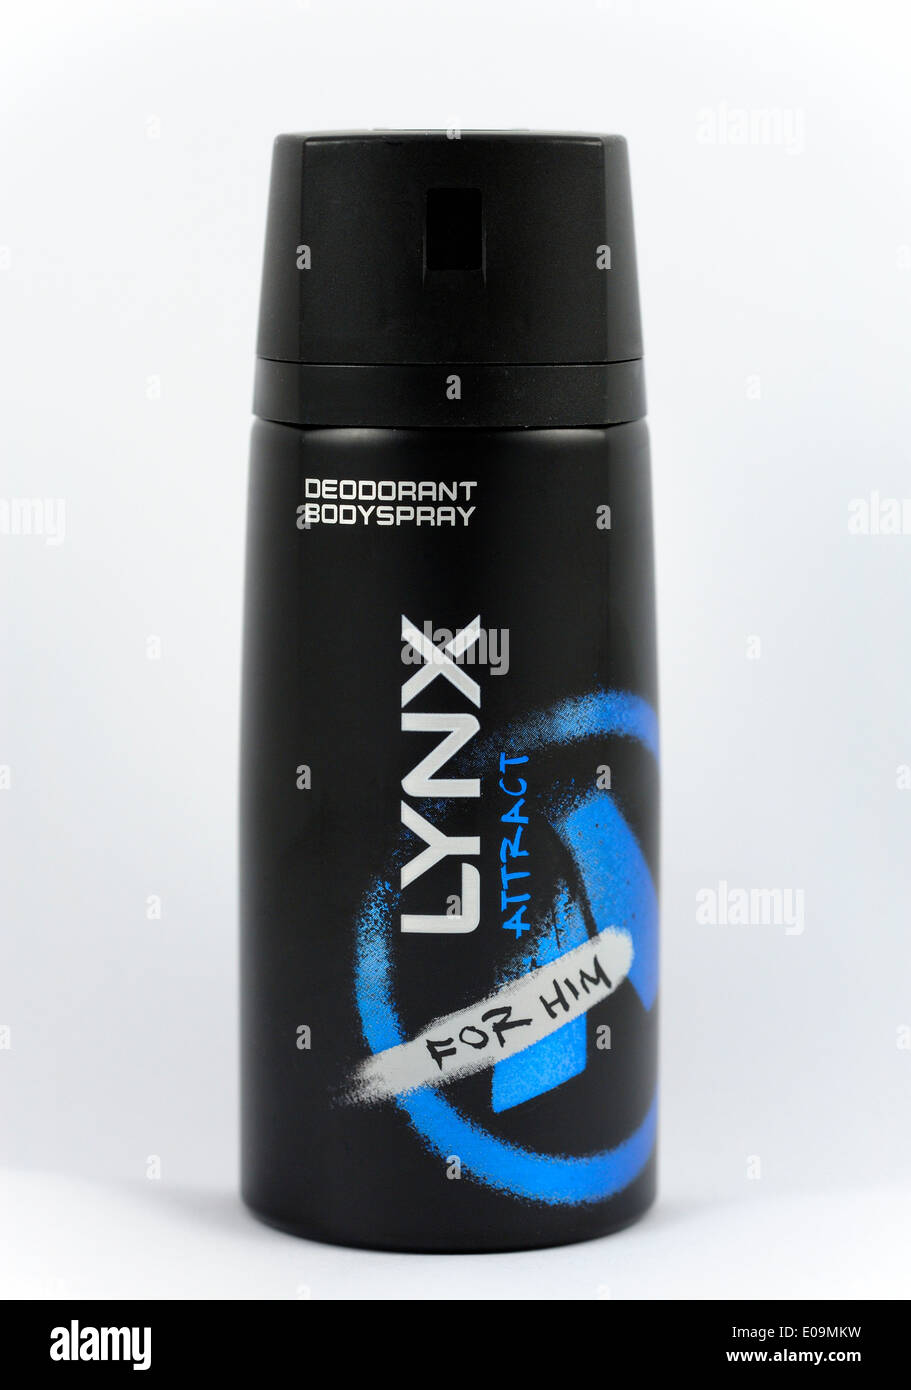 Lynx atraer por él desodorante body spray Foto de stock